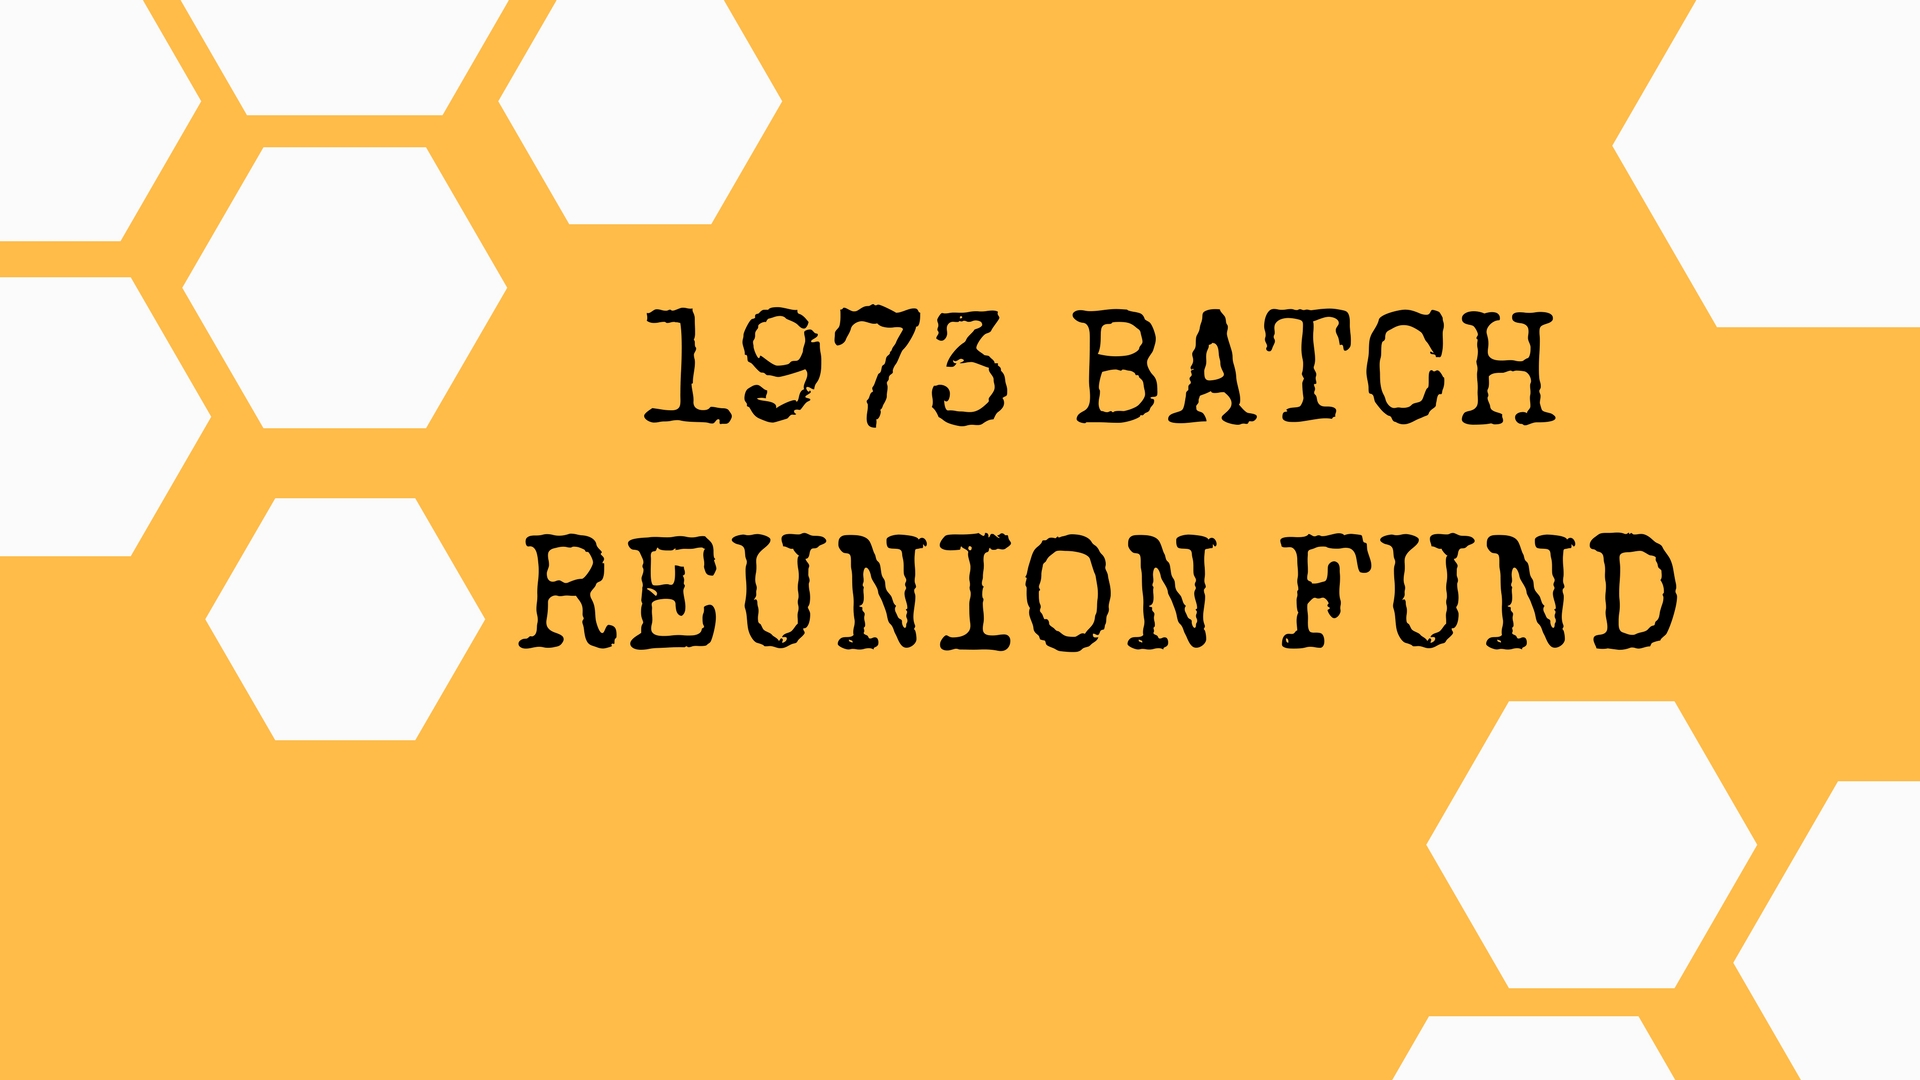 1973 Batch Golden Jubilee Reunion fund